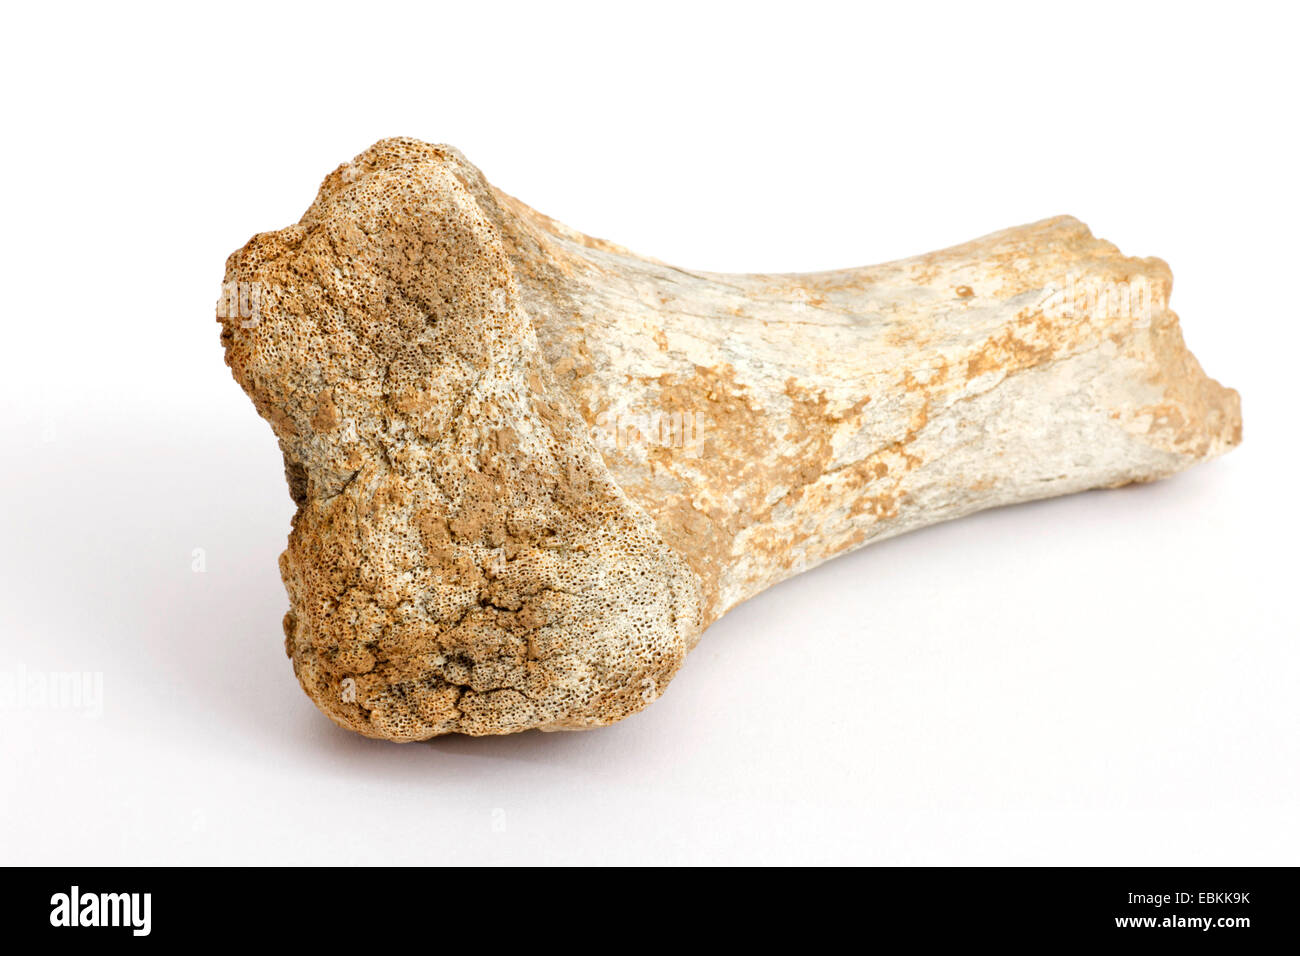 cave bear (Ursus spelaeus), bone fragment found at the Swabian Alb, Germany, Swabian Alb Stock Photo